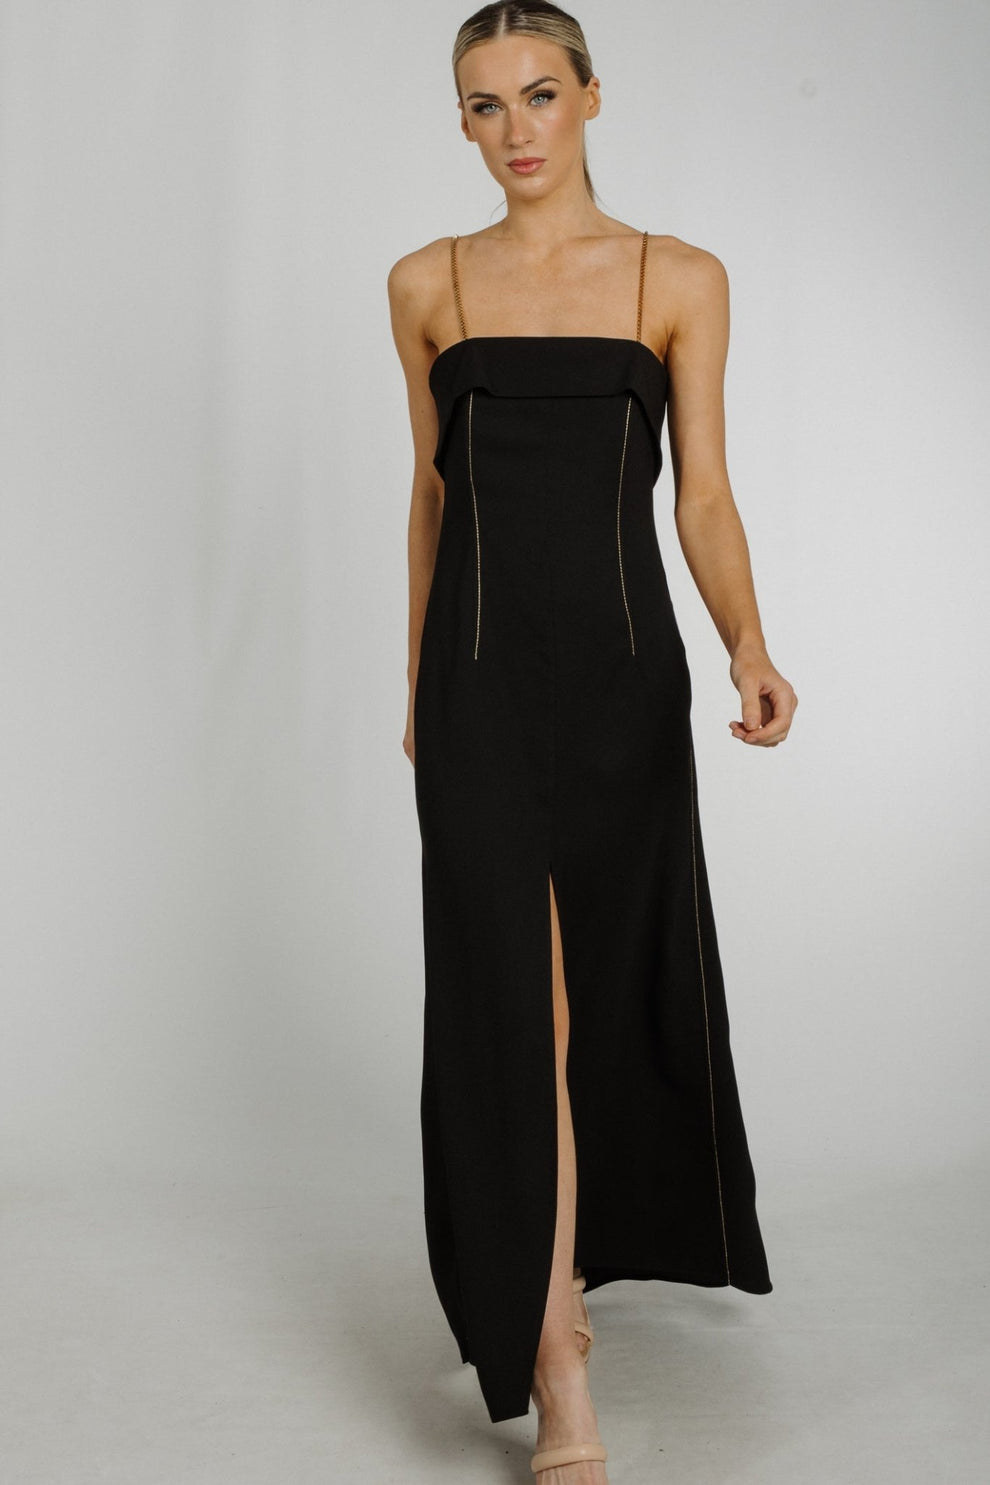 Kayla Chain Strap Dress In Black – The Walk in Wardrobe